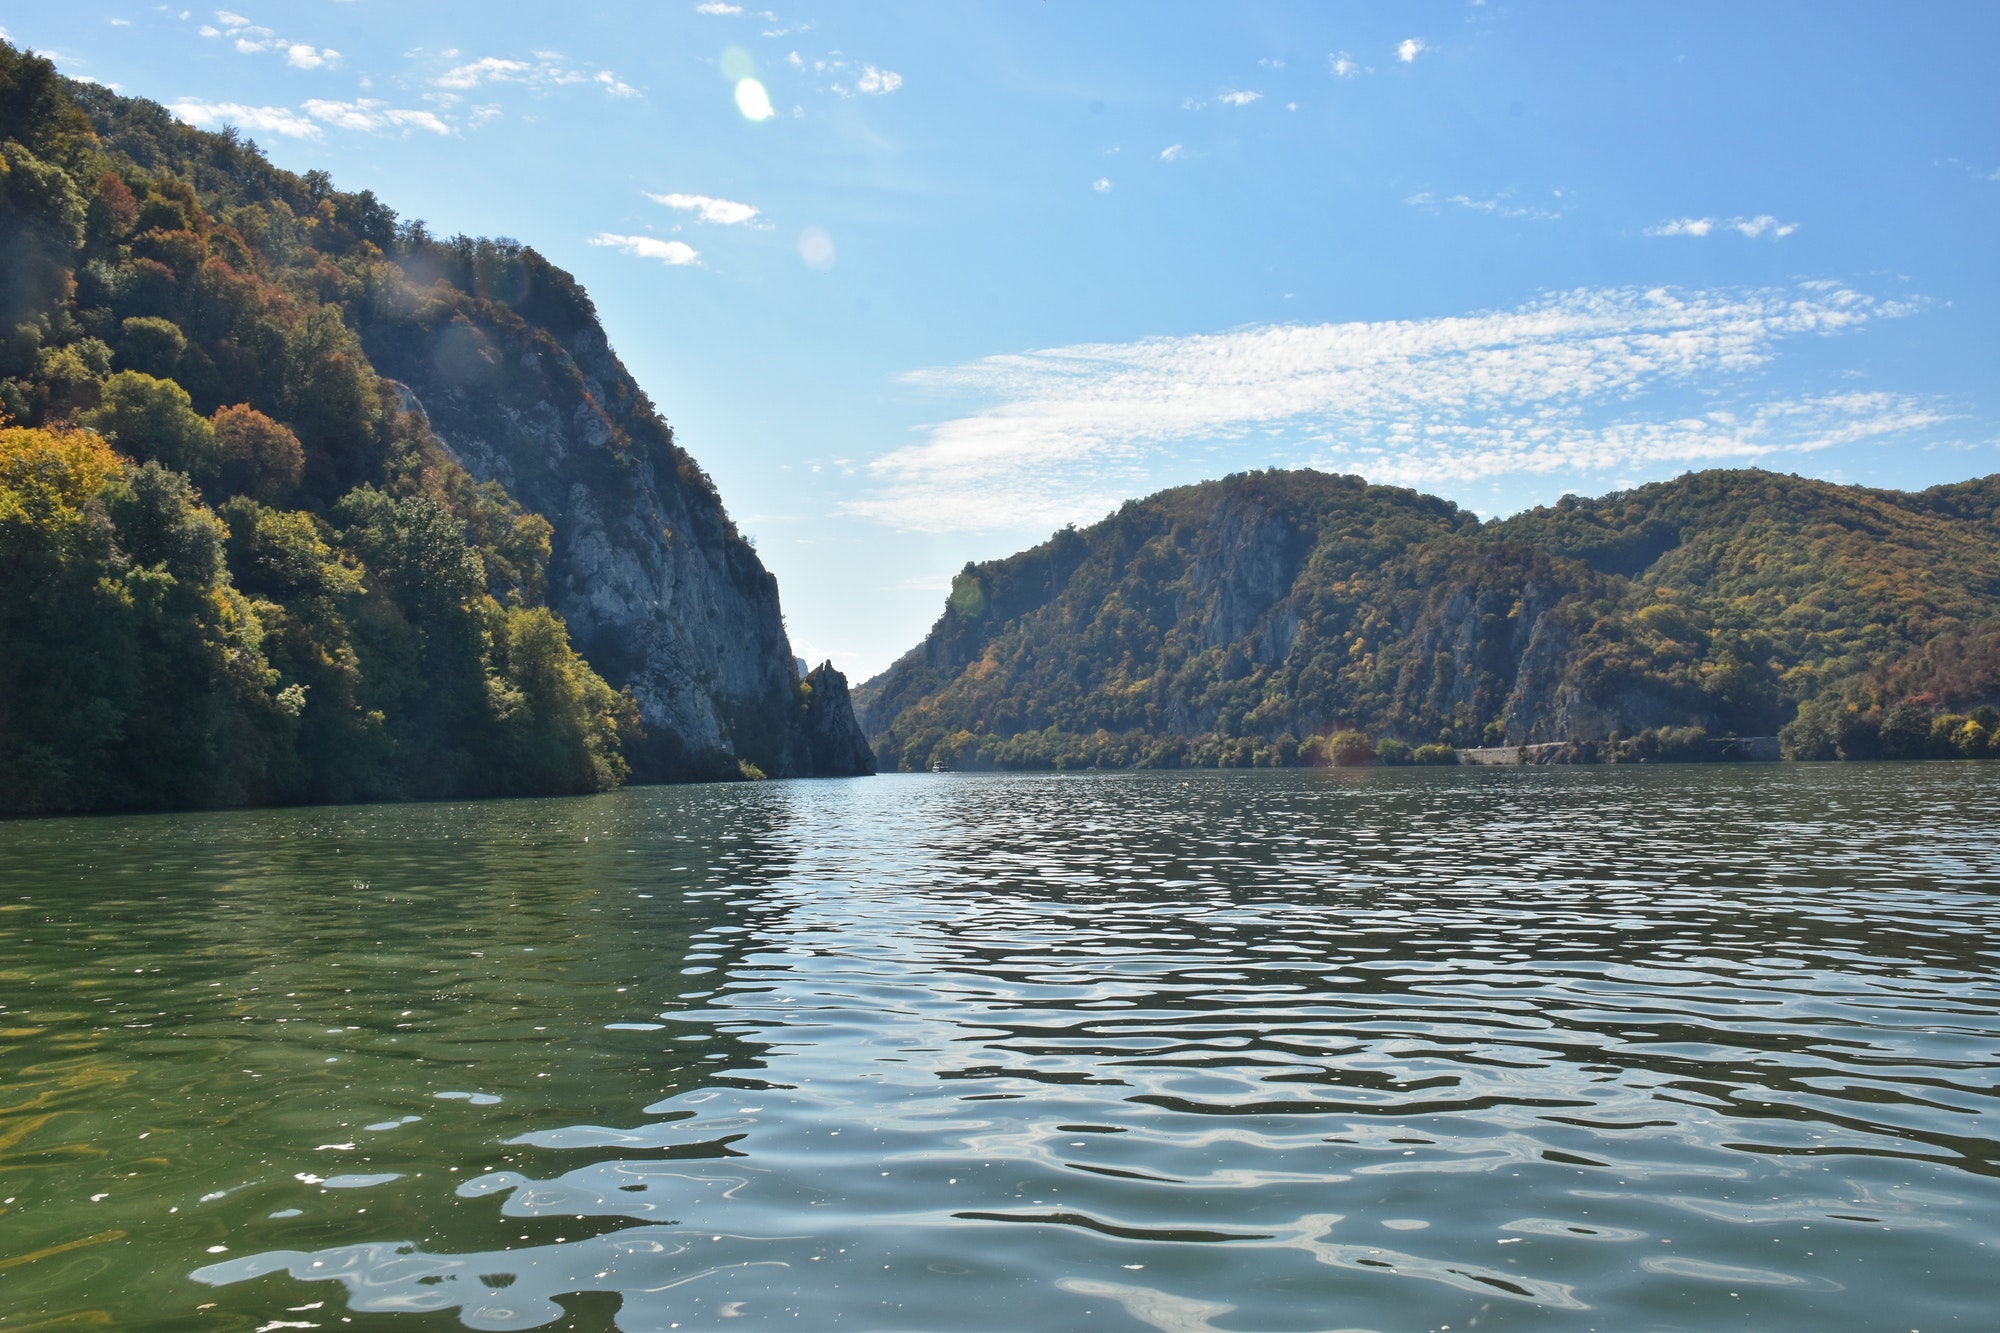 Danube gorge, Serbia